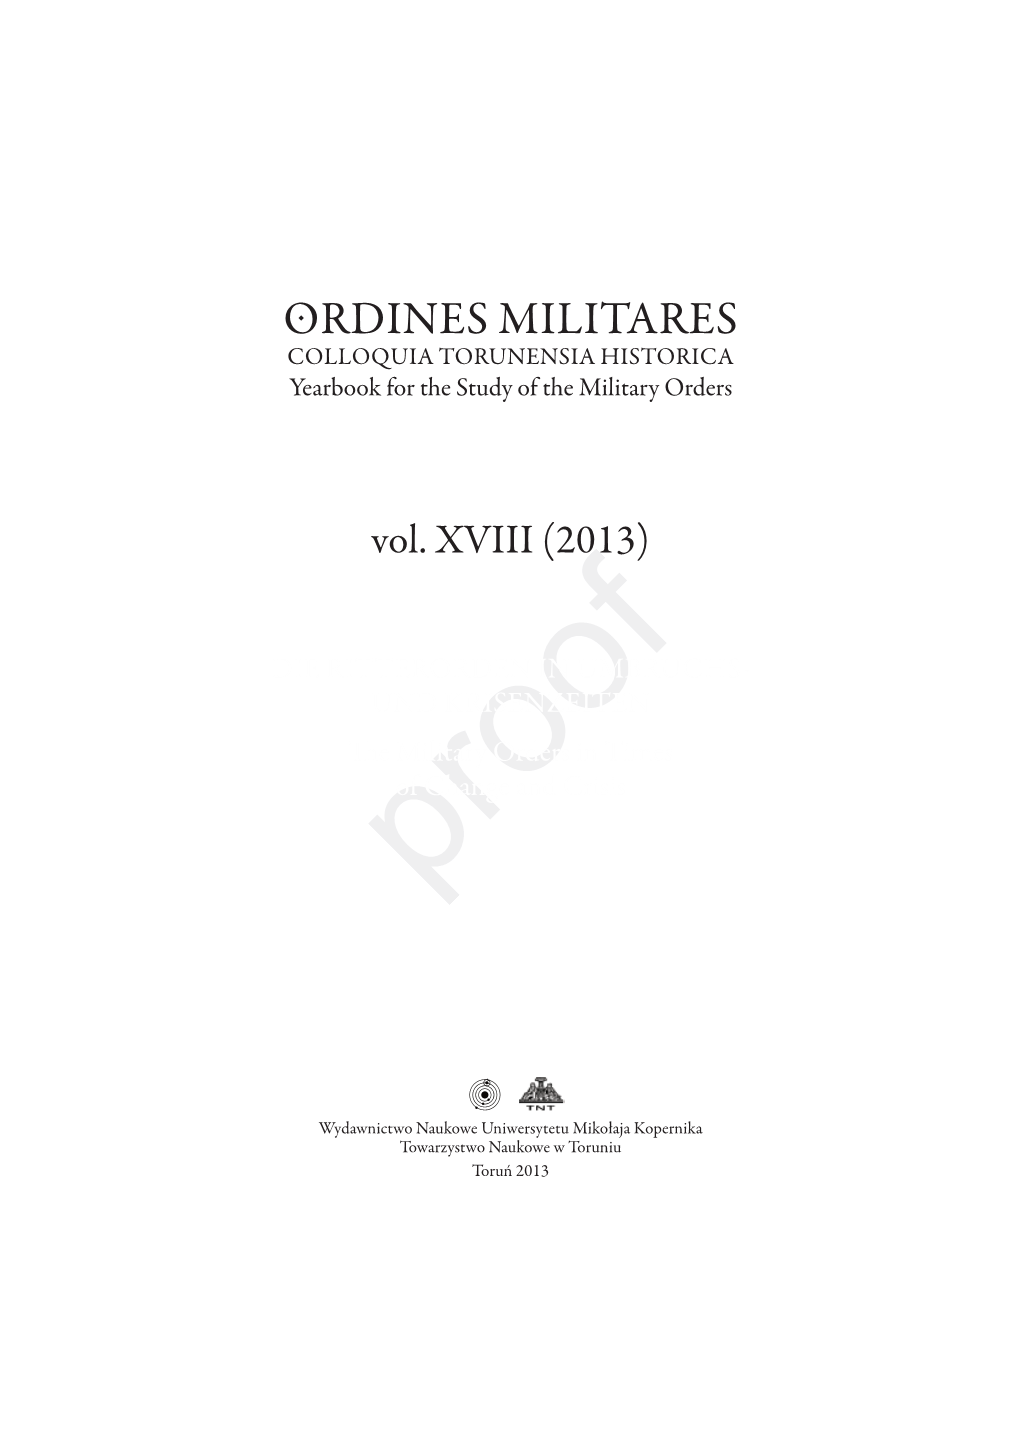 Ordines Militares Conference